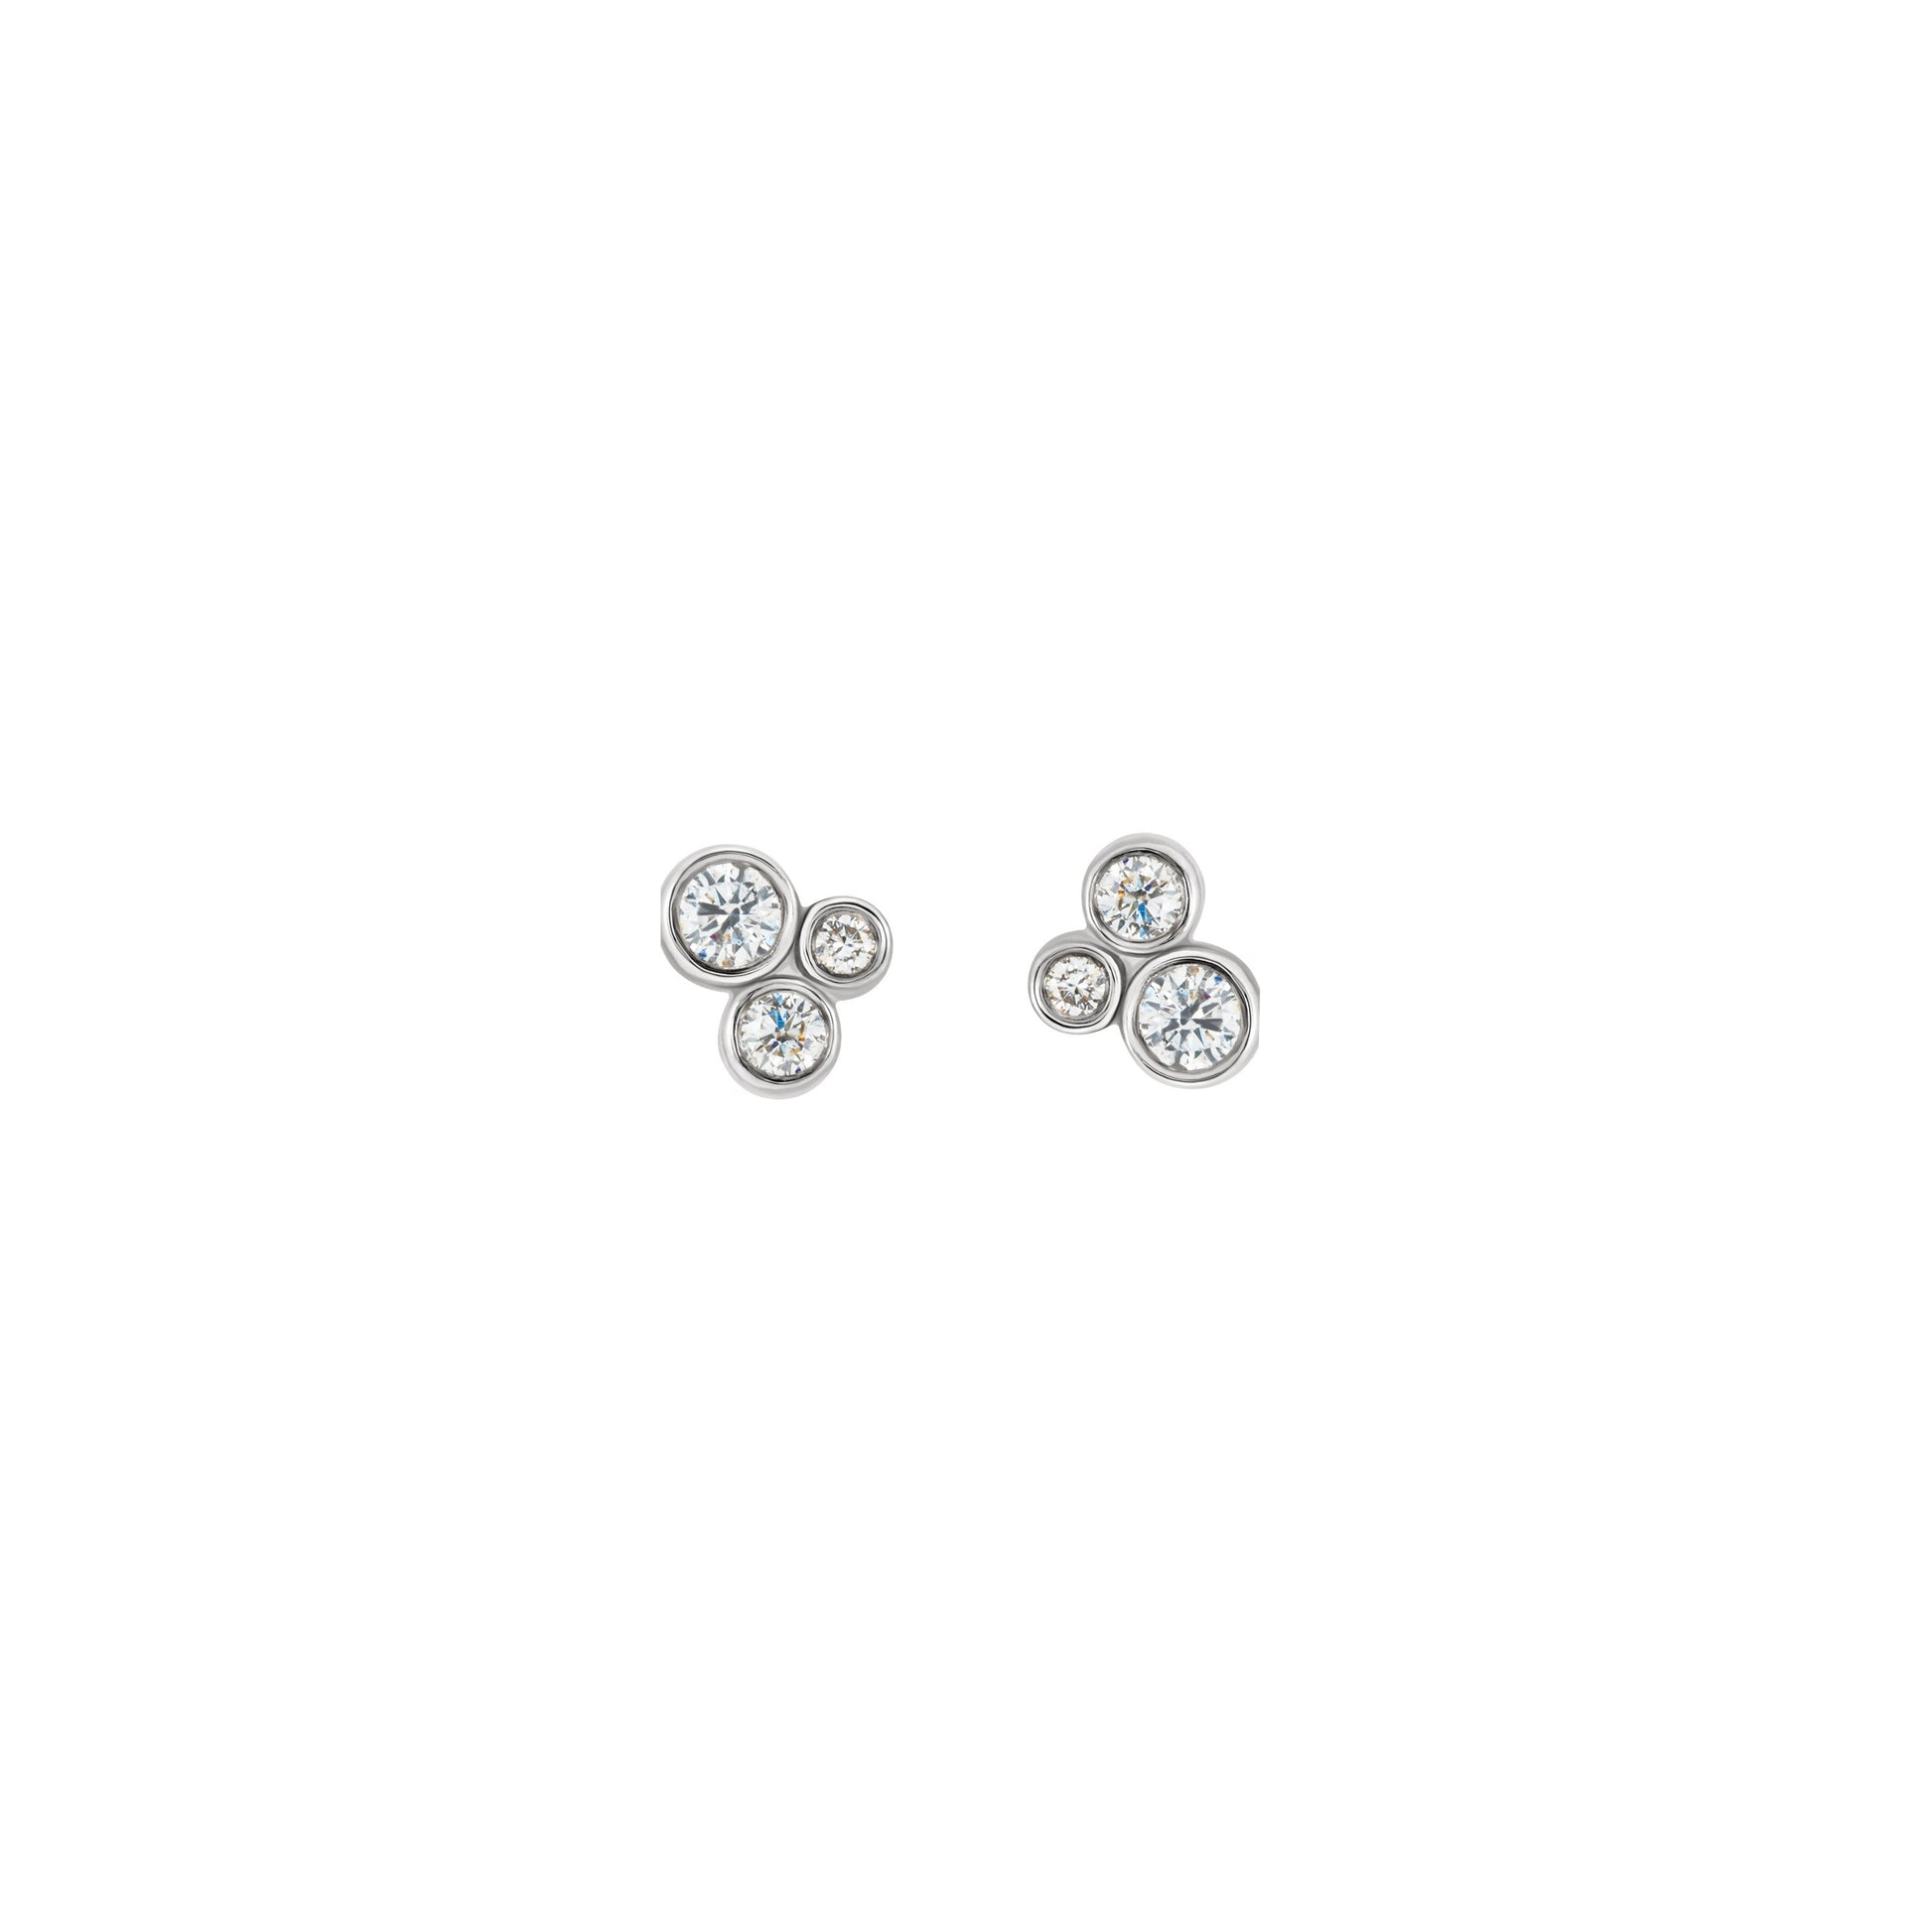 Platinum diamond cluster, bezel set, stud earrings, by ZEALmetal, Nicole Horlor, in Kingston, ON, Canada